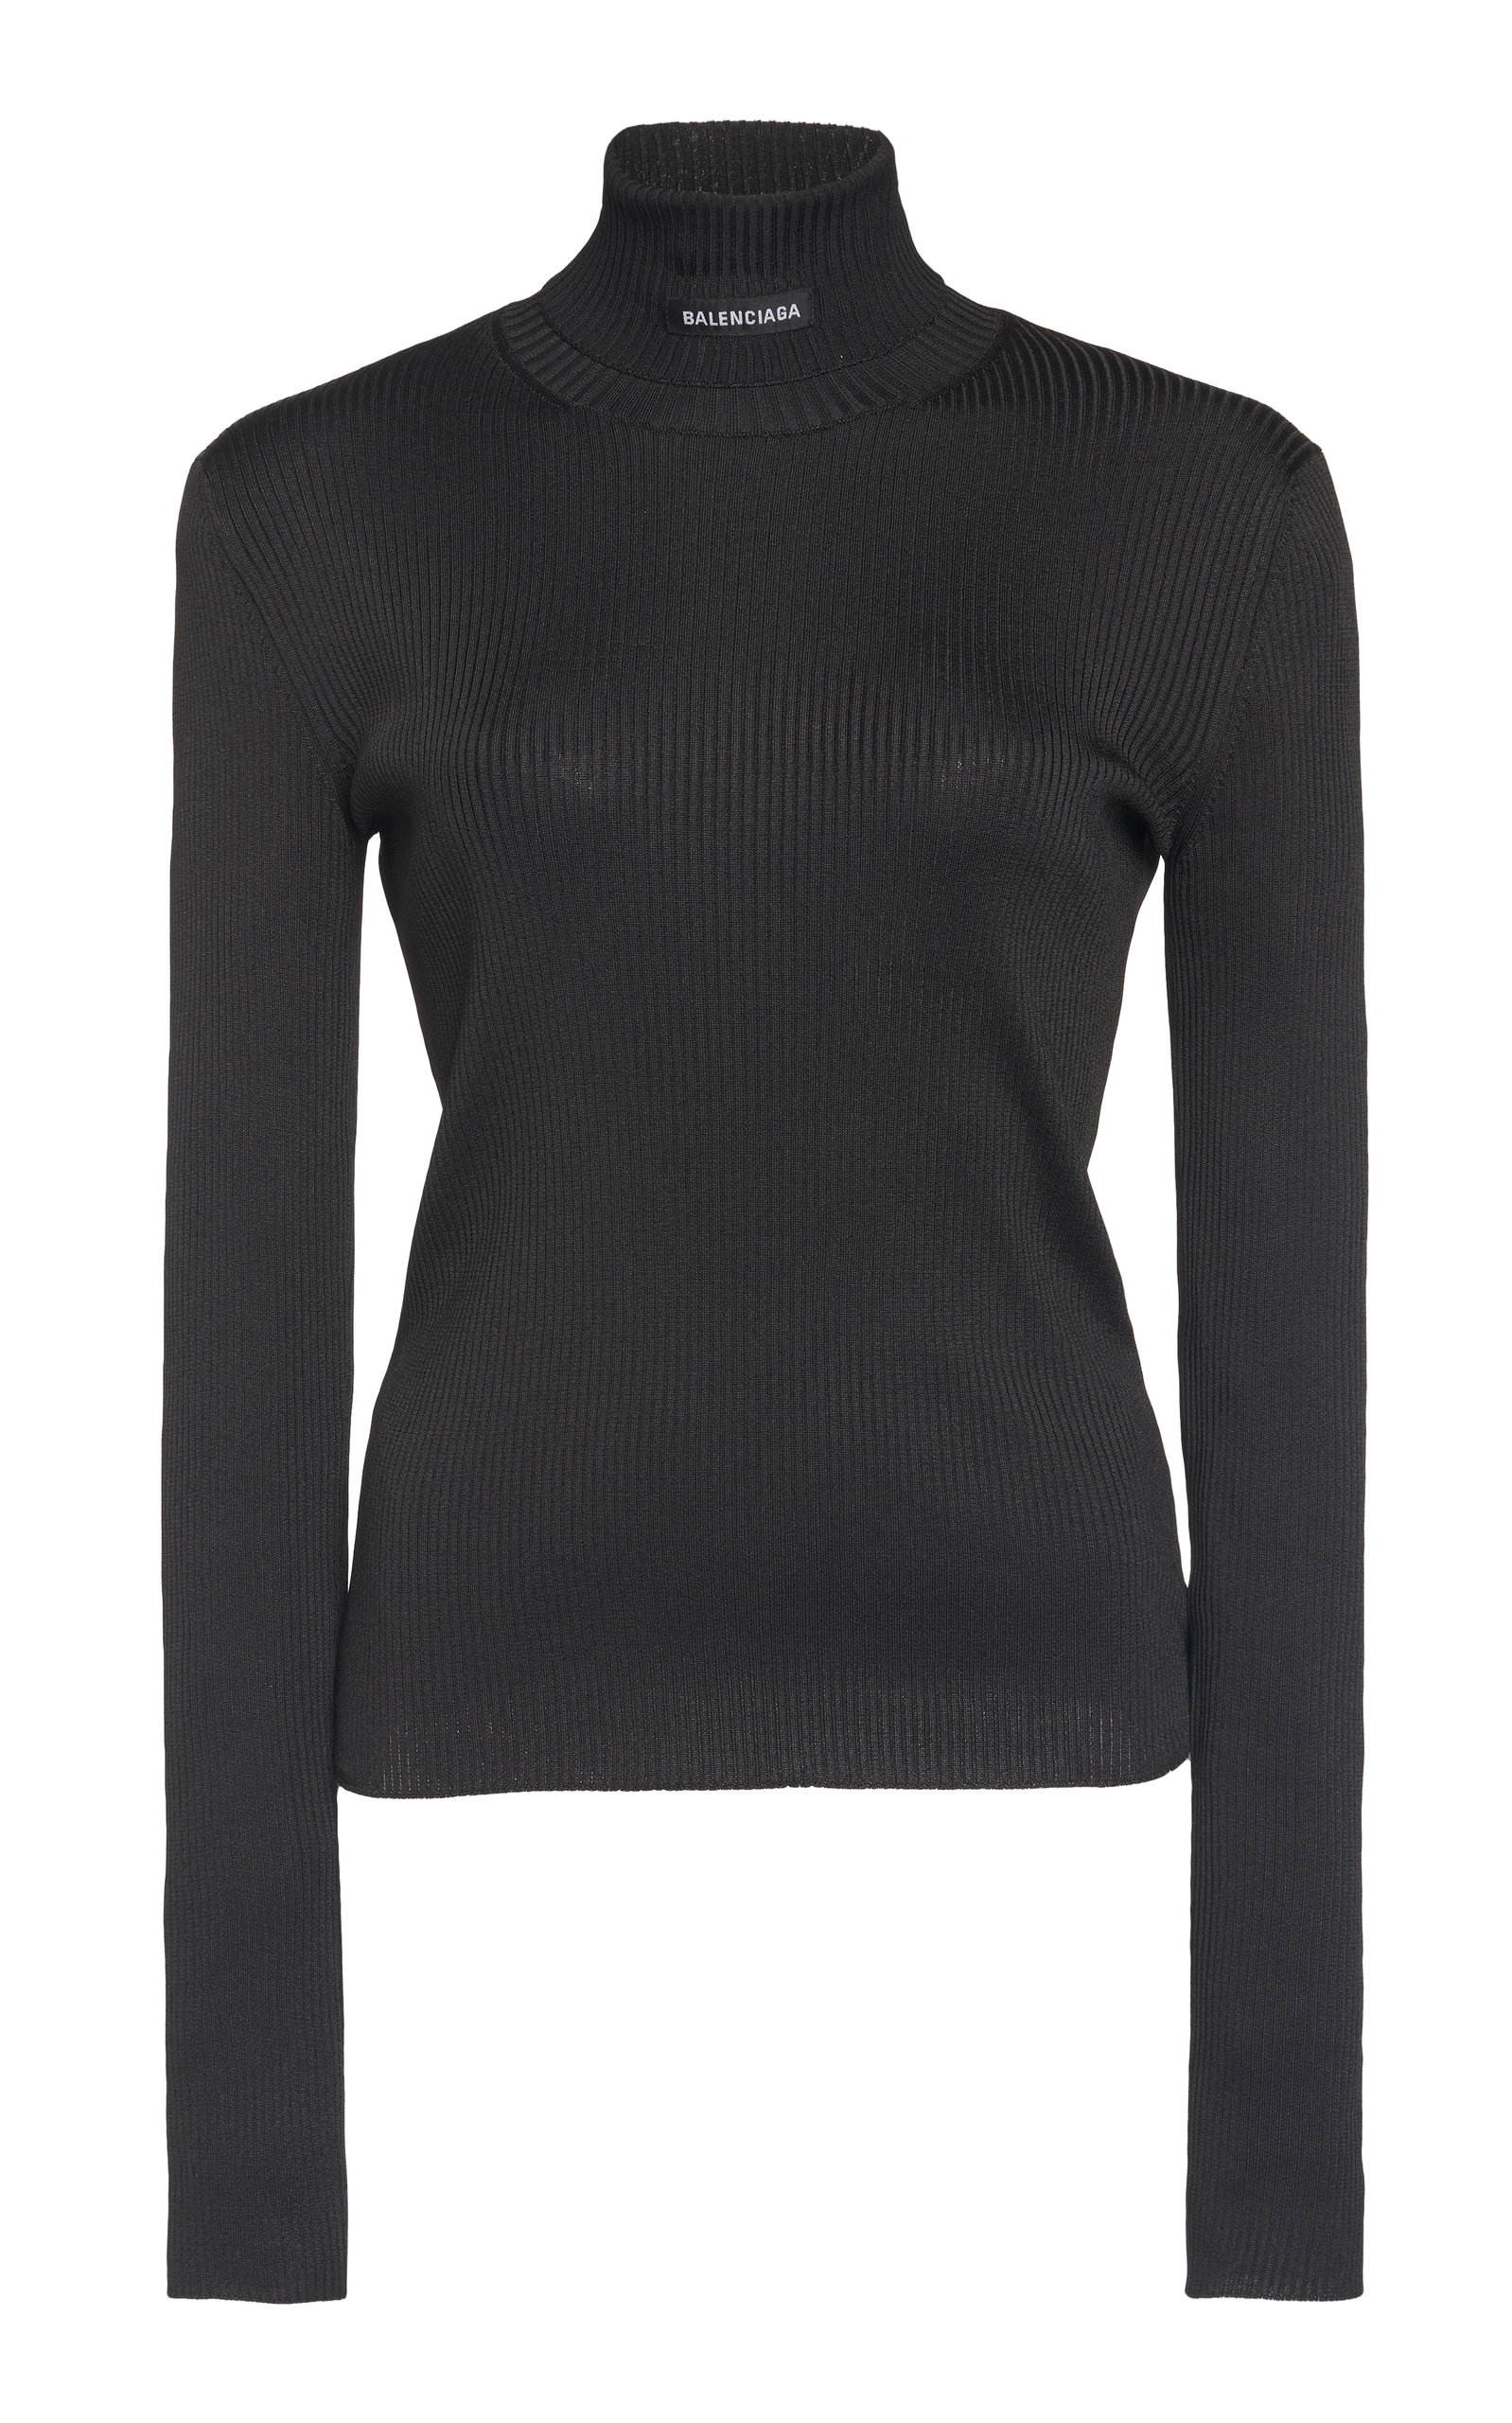 Balenciaga - Women's Logo-Detailed Ribbed-Knit Turtleneck - Black - Moda Operandi